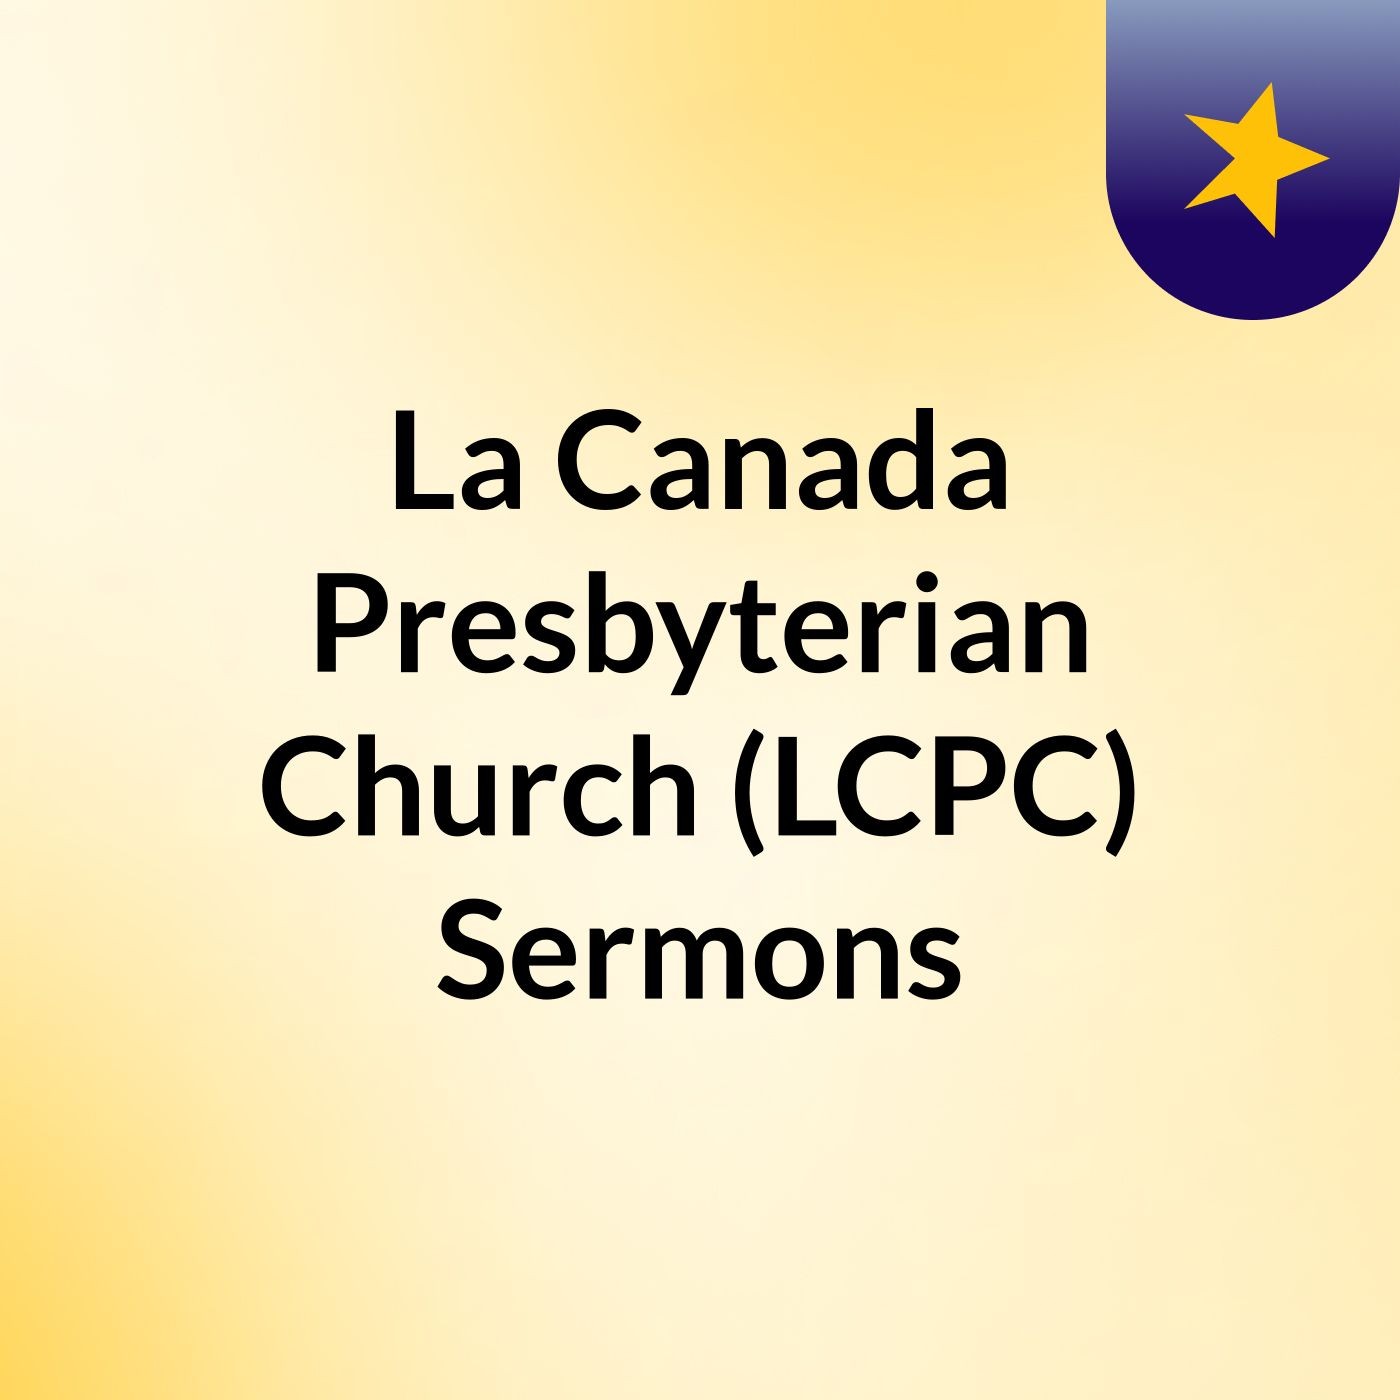 La Canada Presbyterian Church (LCPC) Sermons